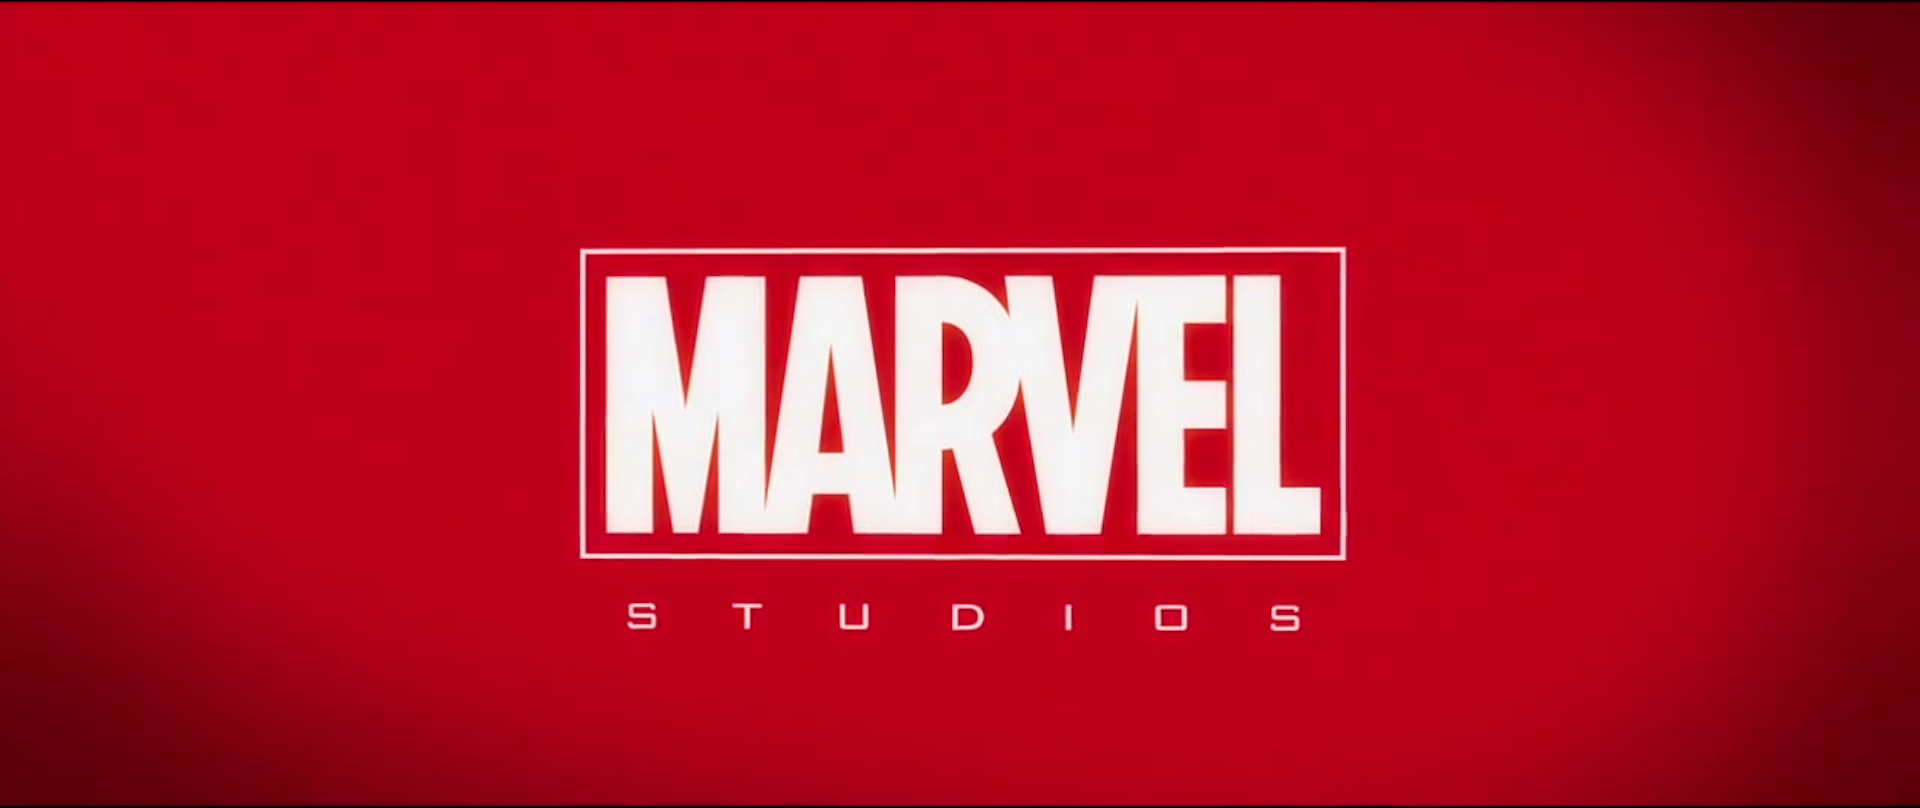 Marvel Studios Logopedia The Logo And Branding Site